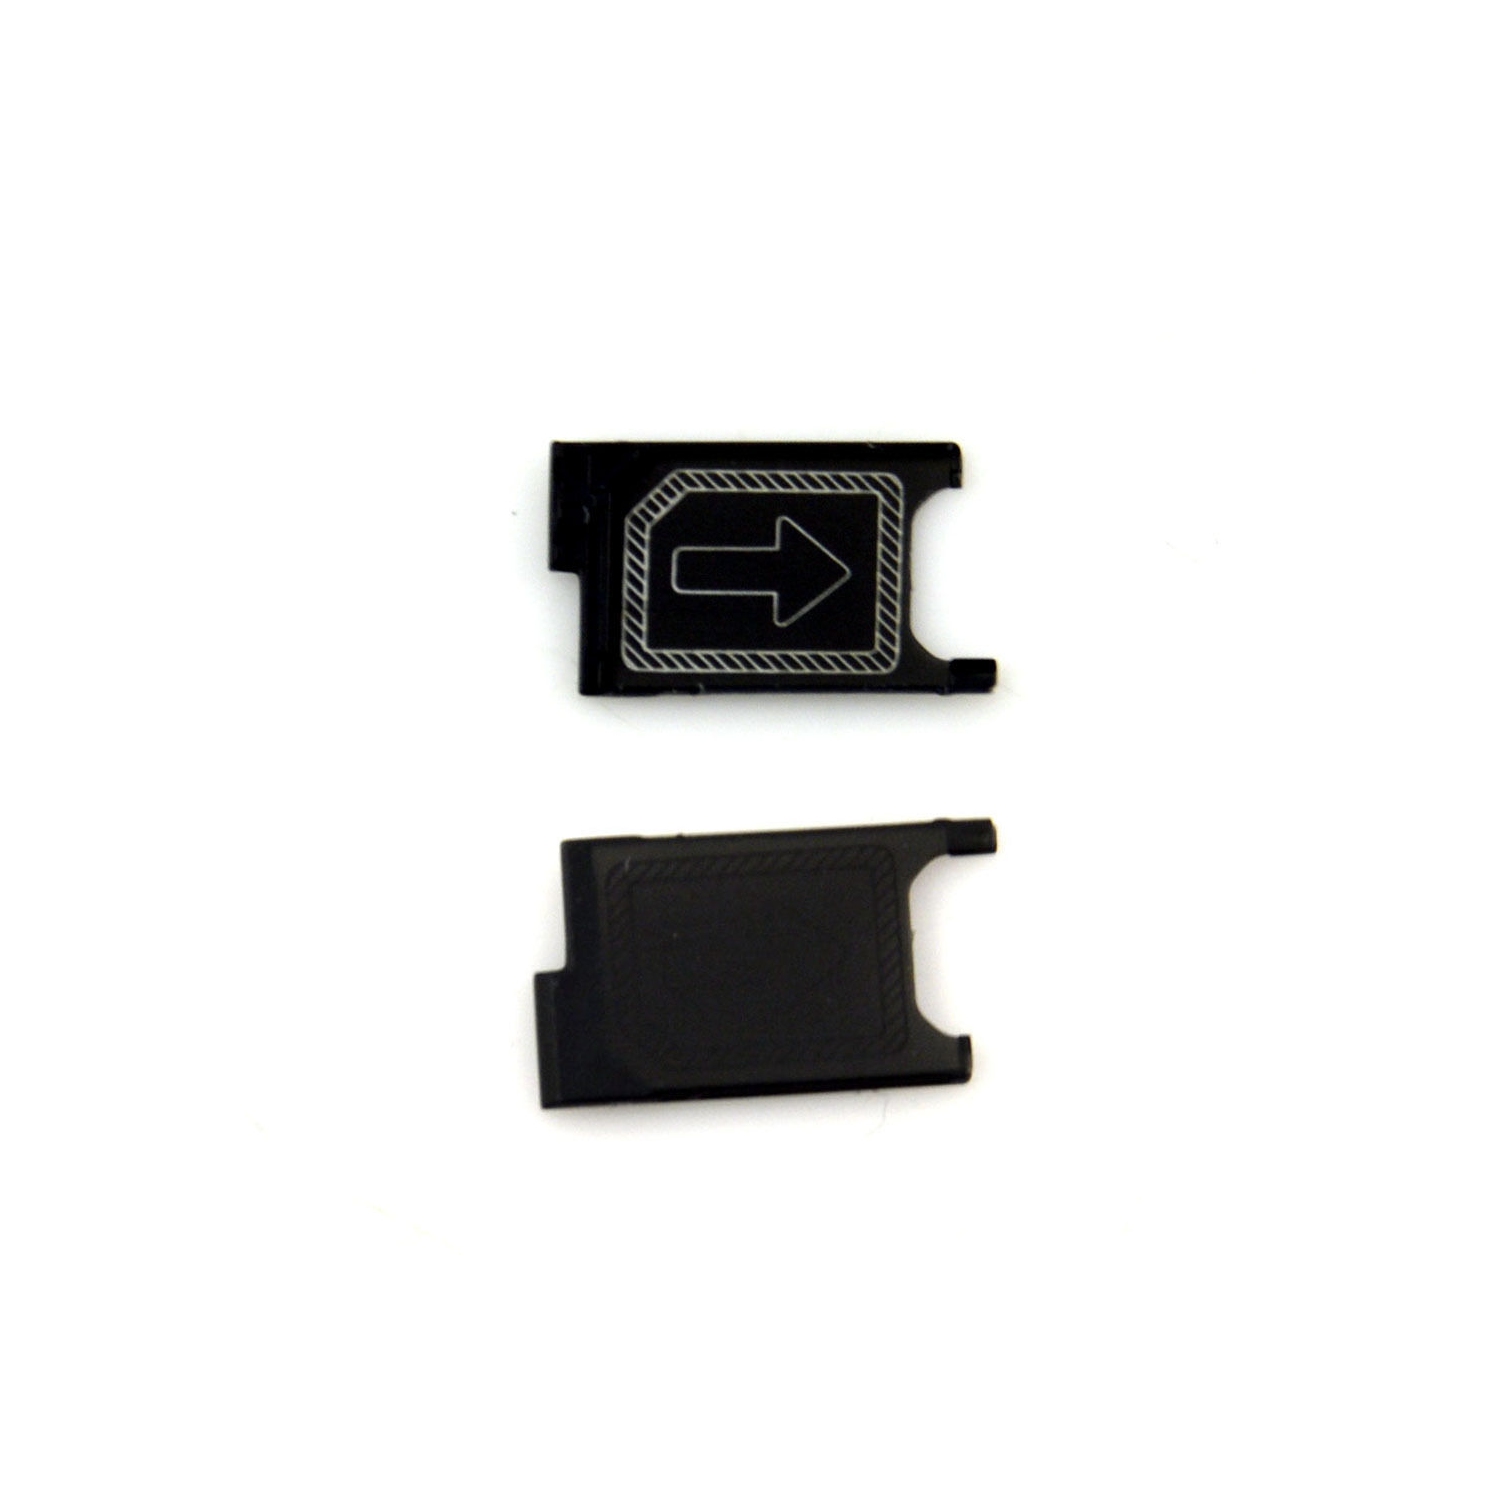 Sony Xperia Z3 / Z3 Compact Nano SIM Card Tray Replacement Part - Black